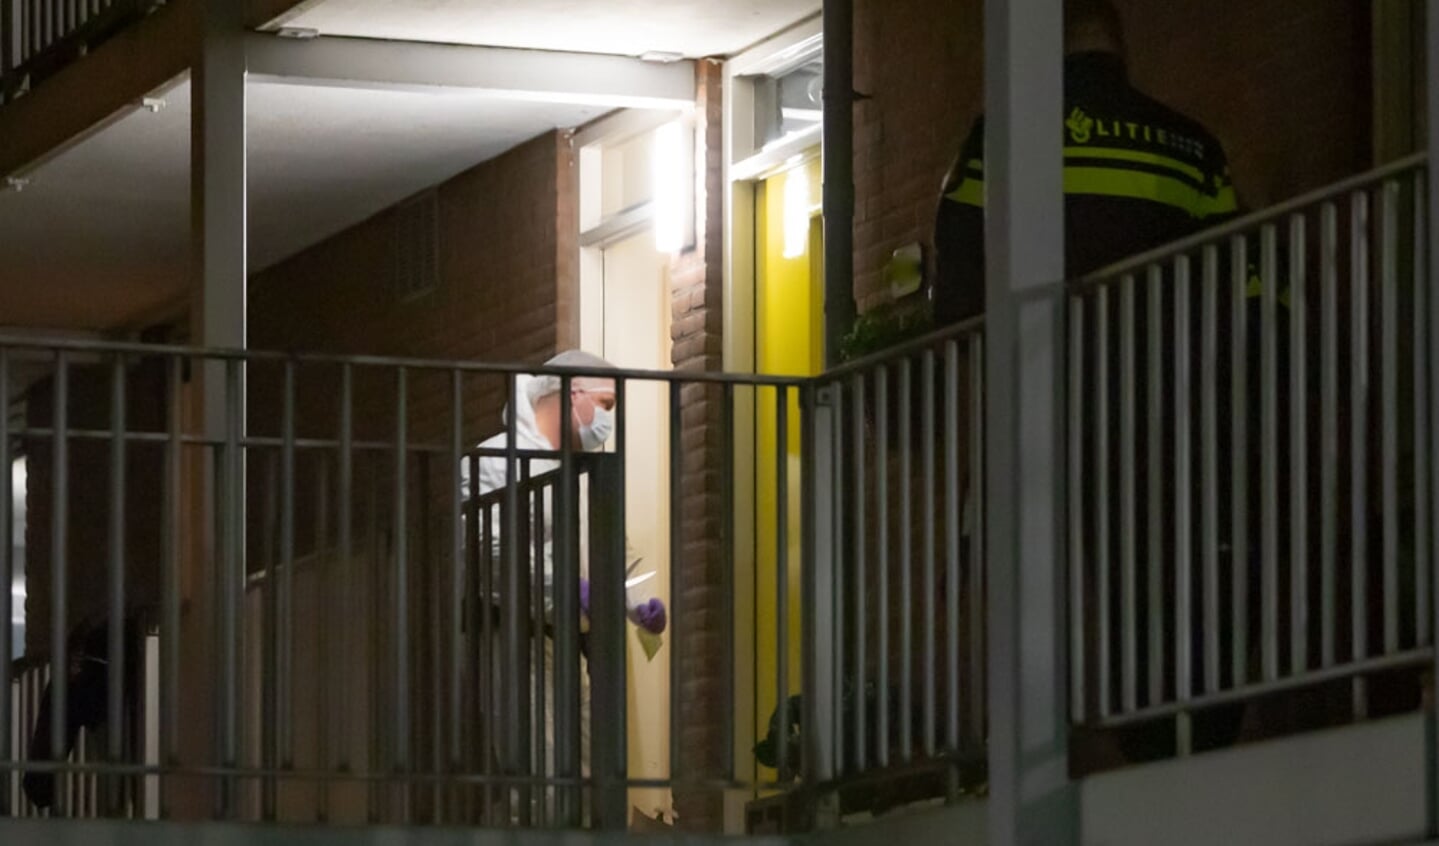 Nachtelijk forensisch onderzoek in woning in Baarn.